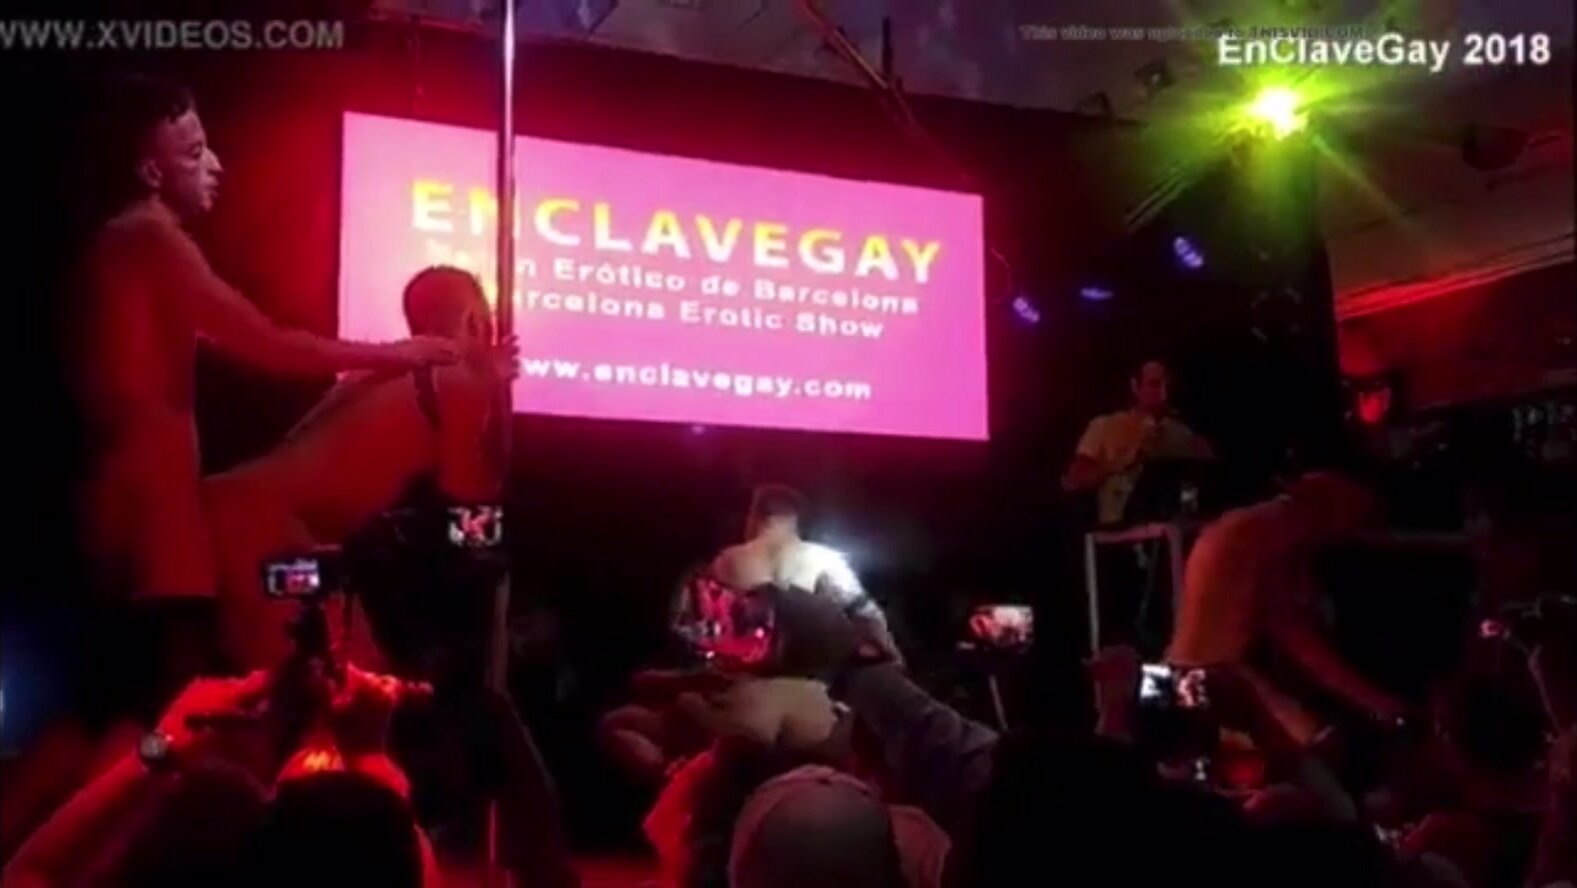 Hot gay sex show Barcelona